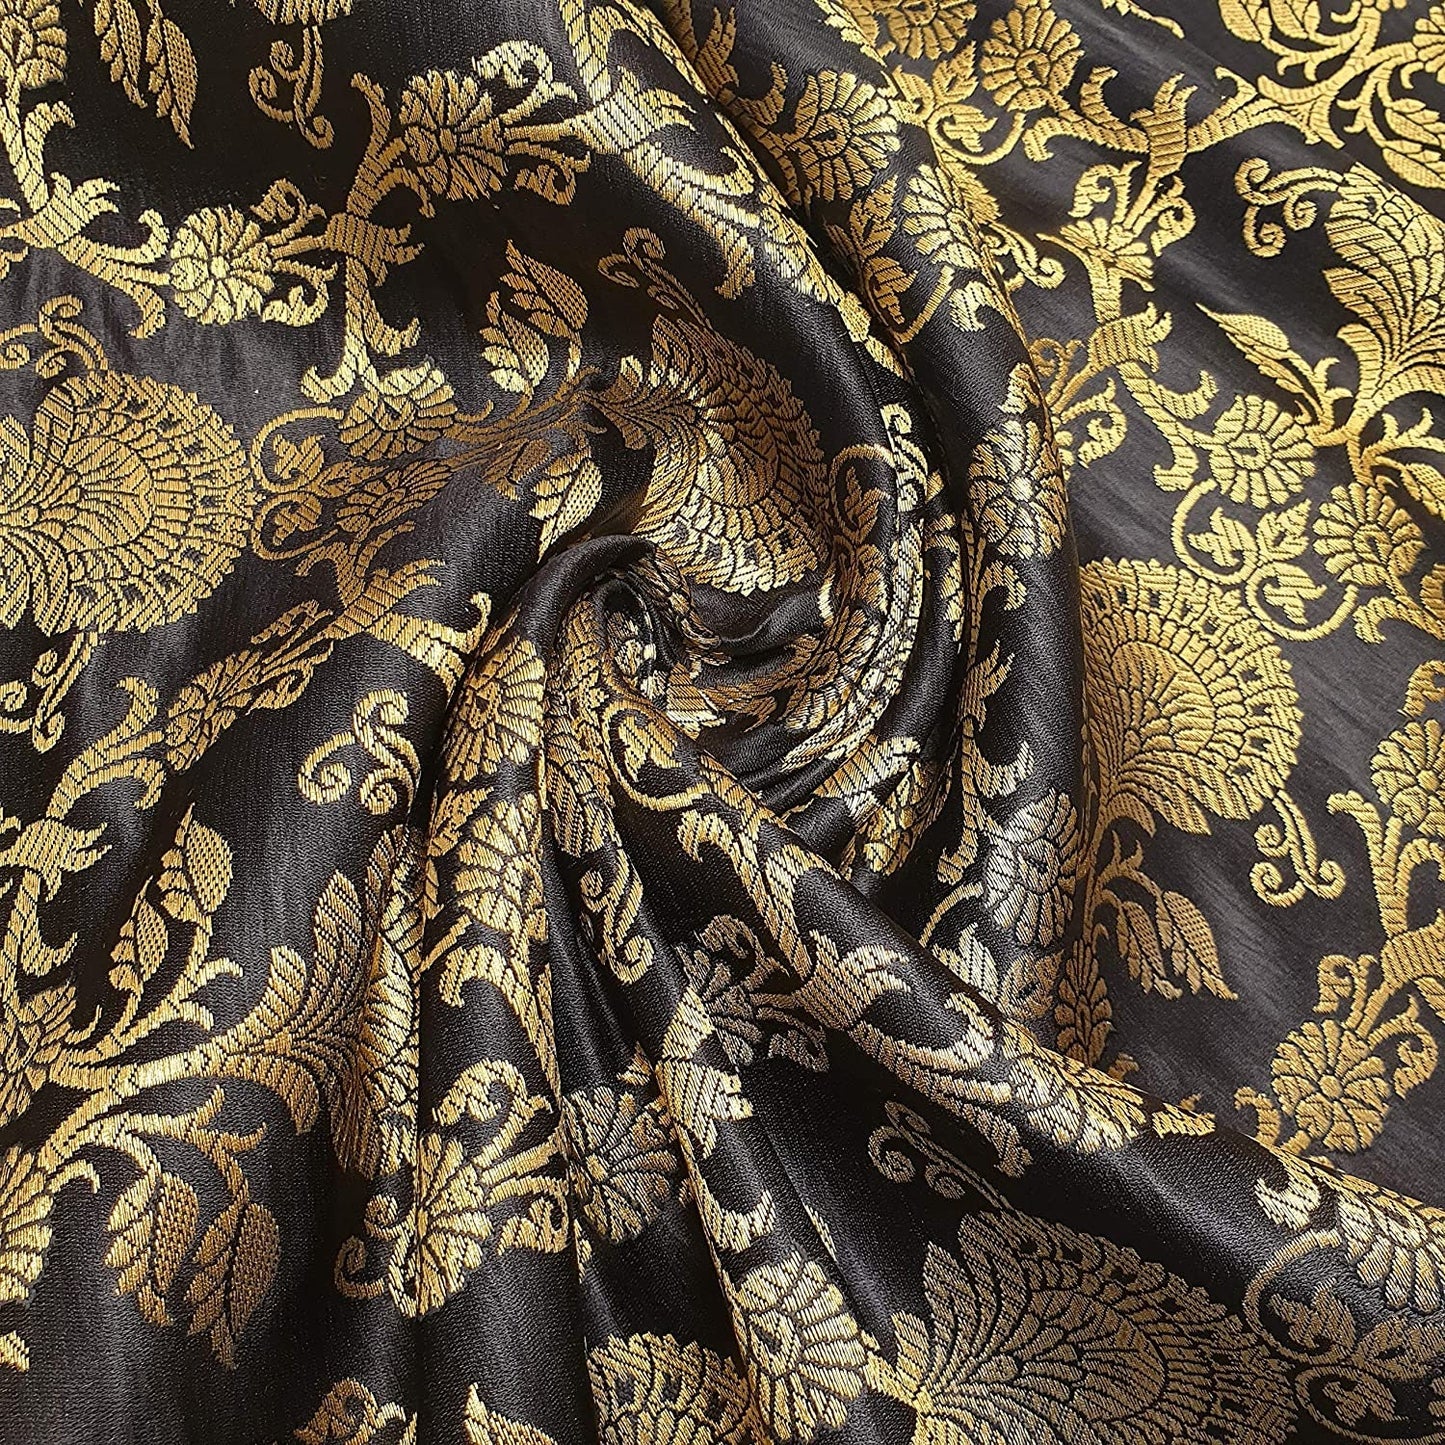 Ornamental Black Floral Gold Metallic Indian Banarasi Brocade Fabric Handloom Premium Fabric By The Meter AM-01